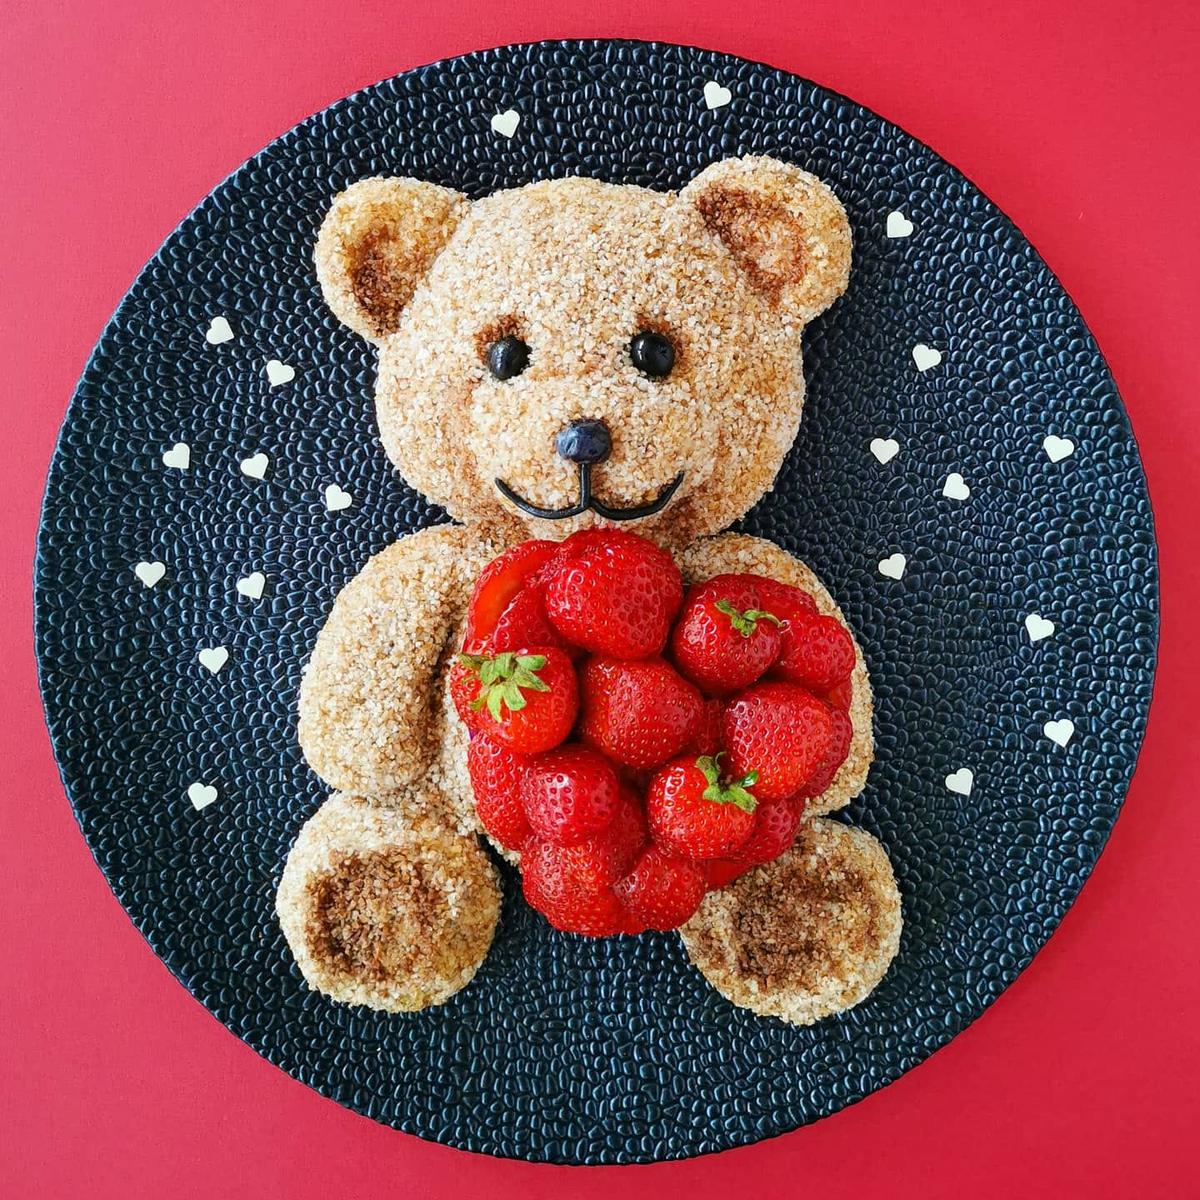 A cuddly teddy bear made of sugar and strawberries. (Courtesy of <a href="https://www.instagram.com/demealprepper/">Jolanda Stokkermans</a>)